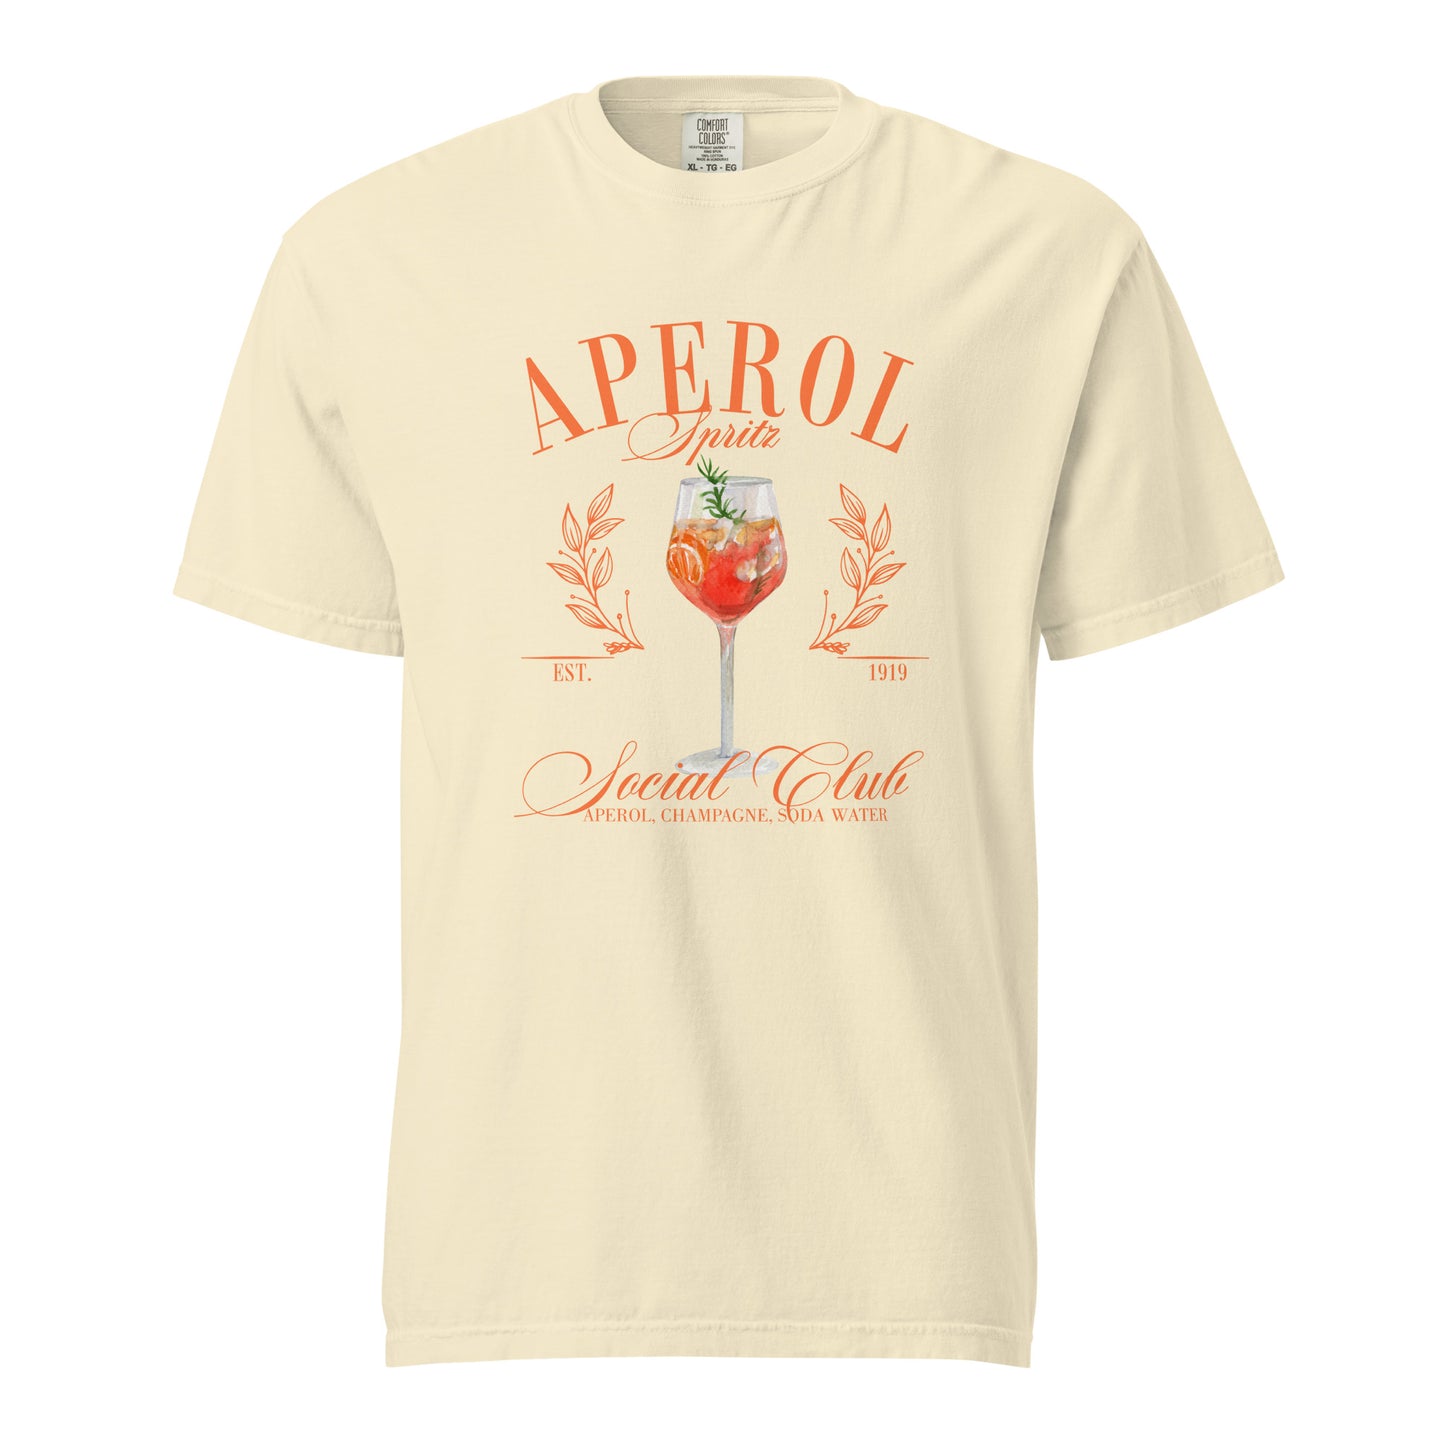 Aperol Spritz Social Club Tee